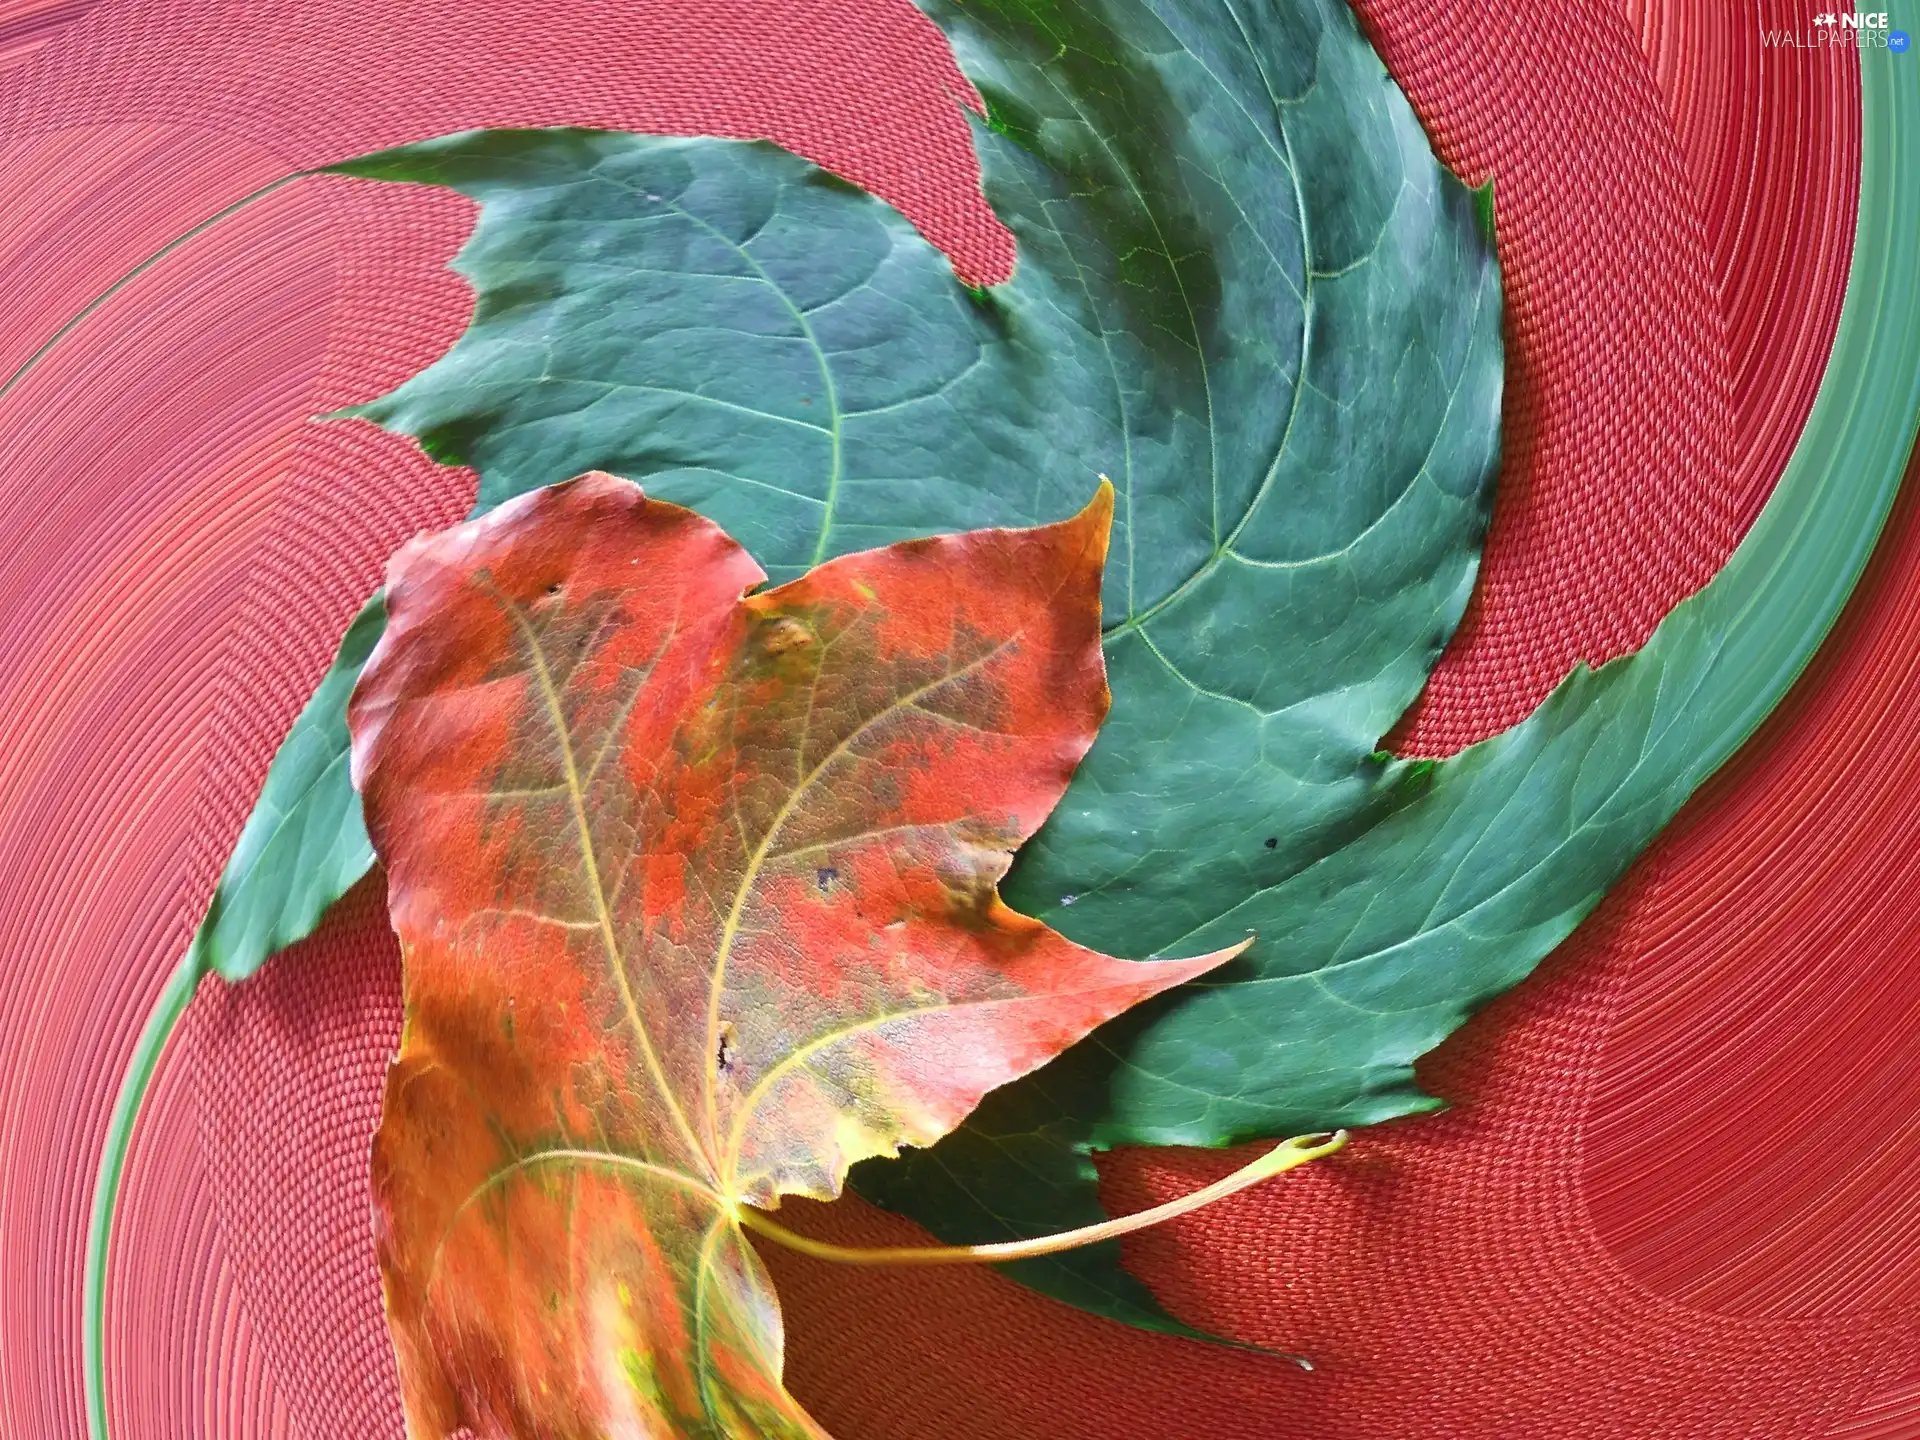 Leaf, Autumn